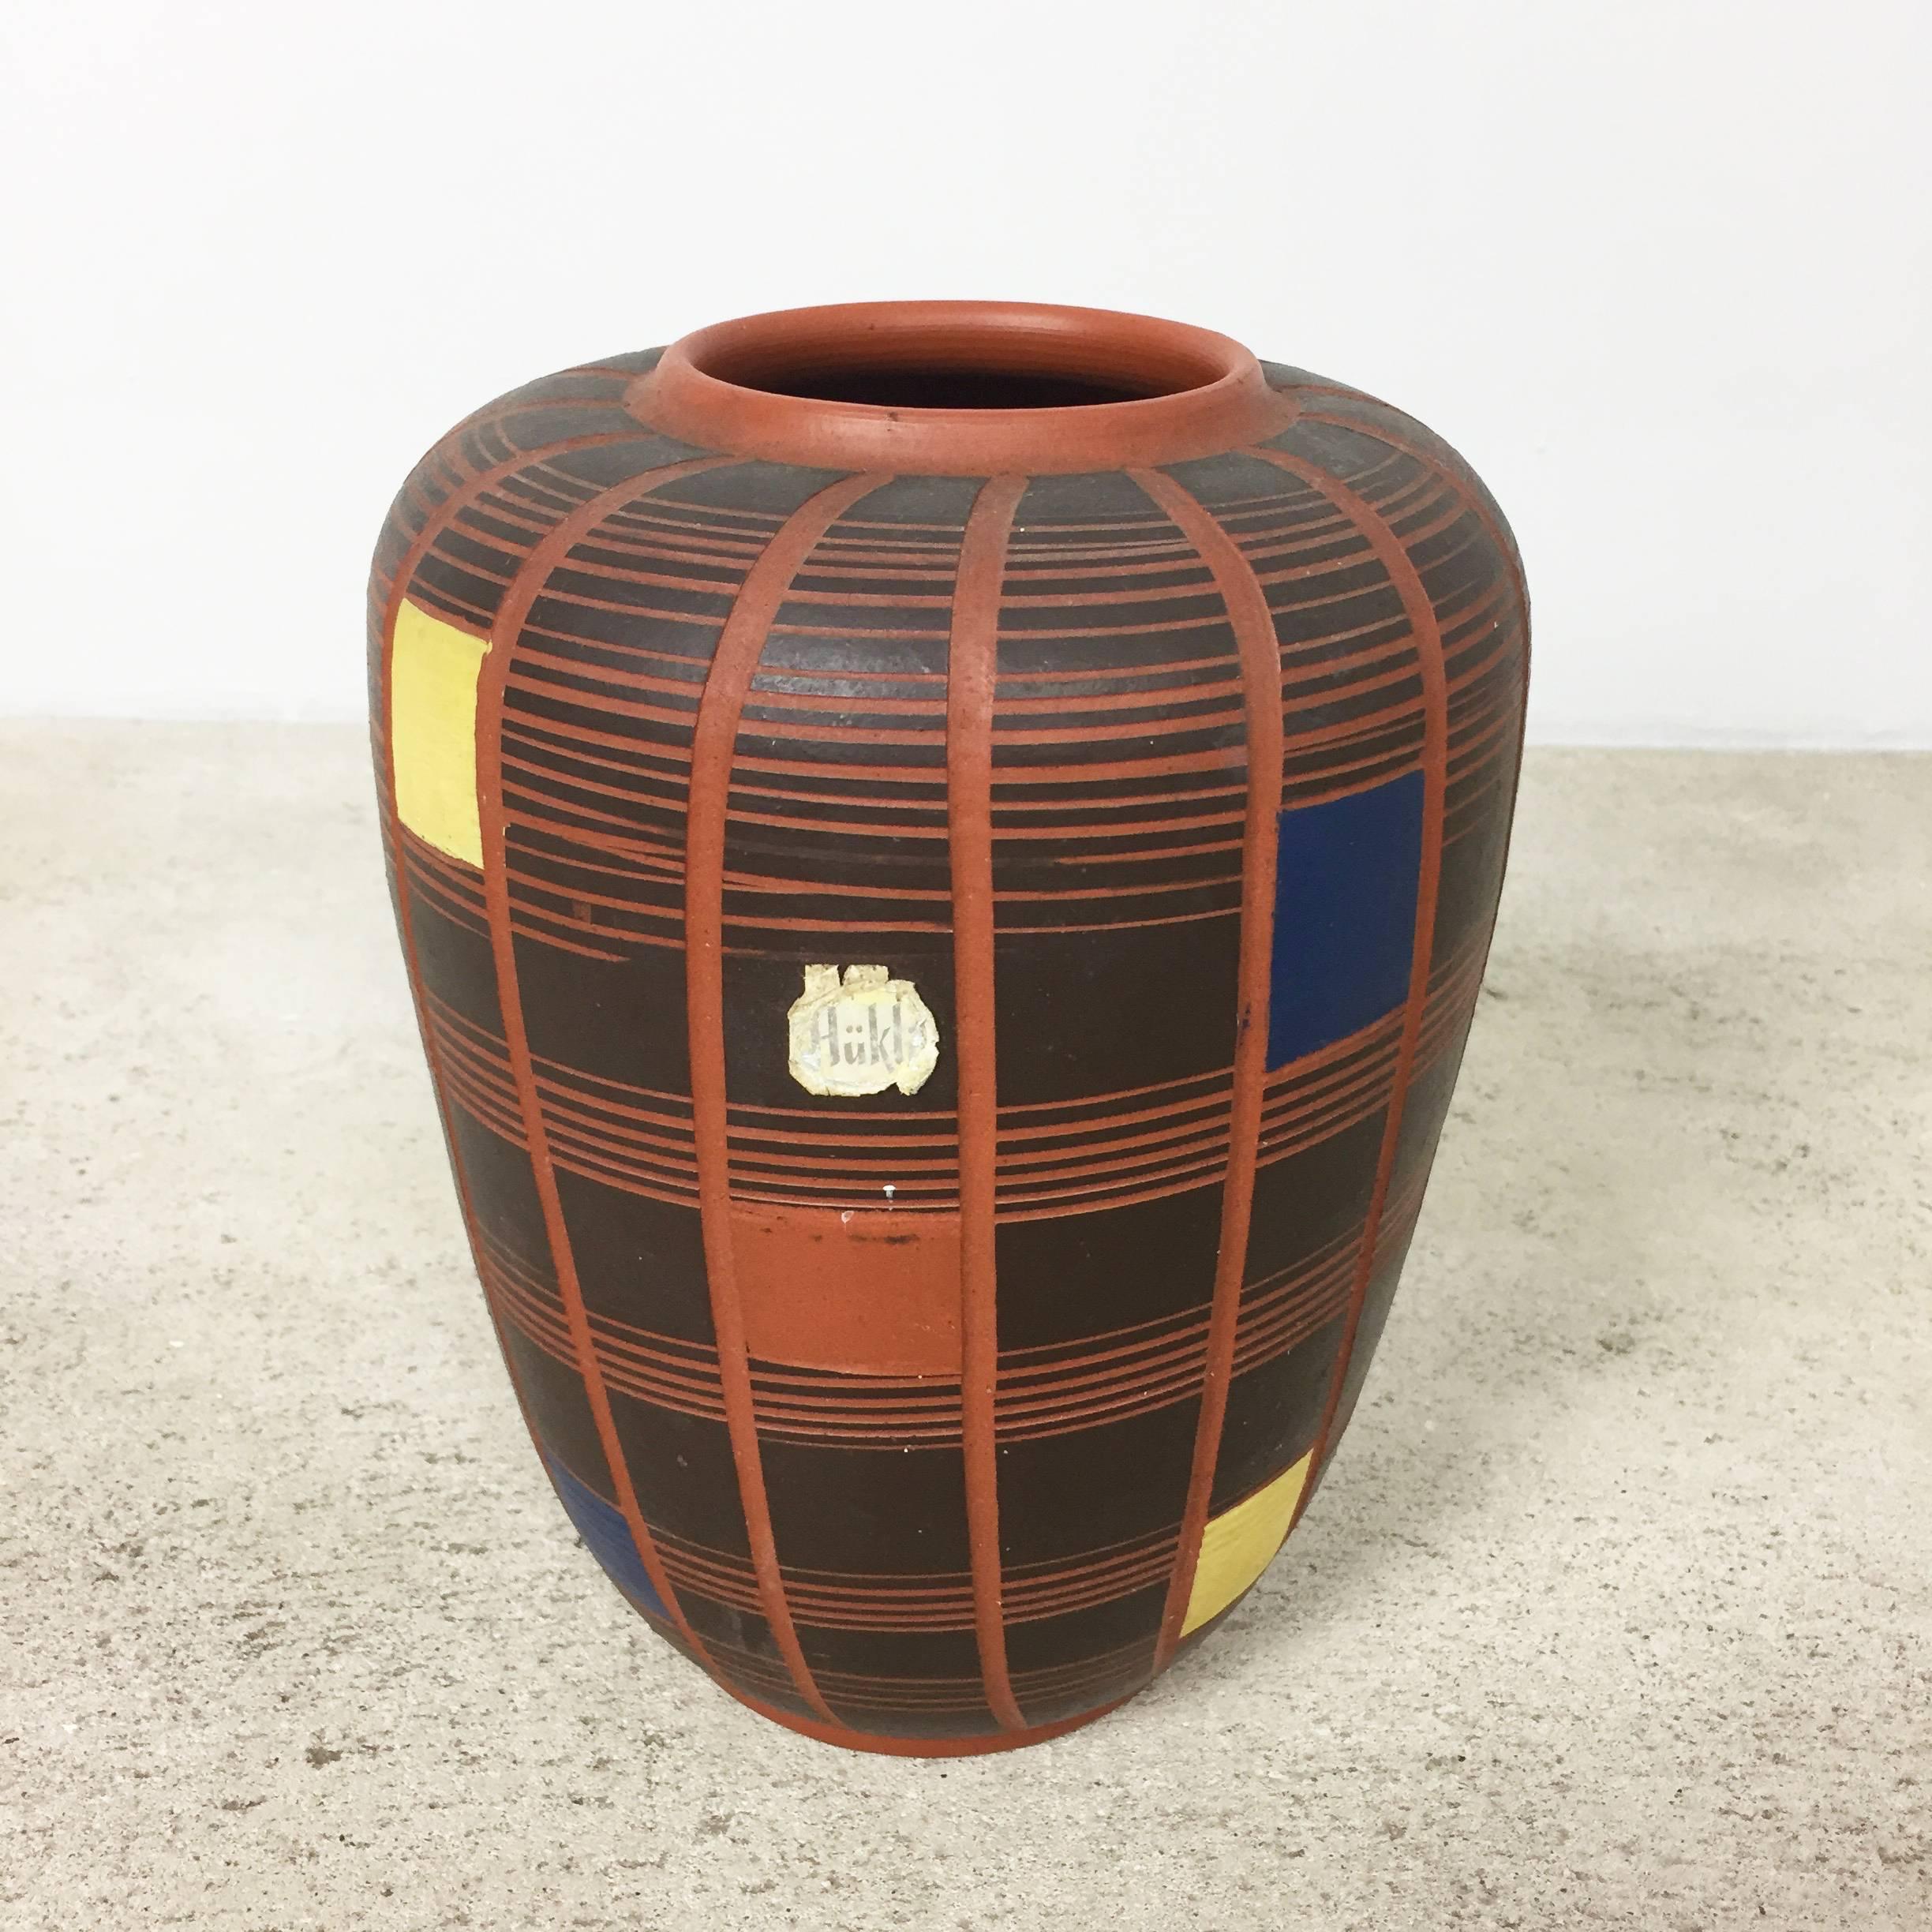 Mid-Century Modern Vintage 1960s Cubic Ceramic Pottery Vase by Hükli Ceramic, Germany